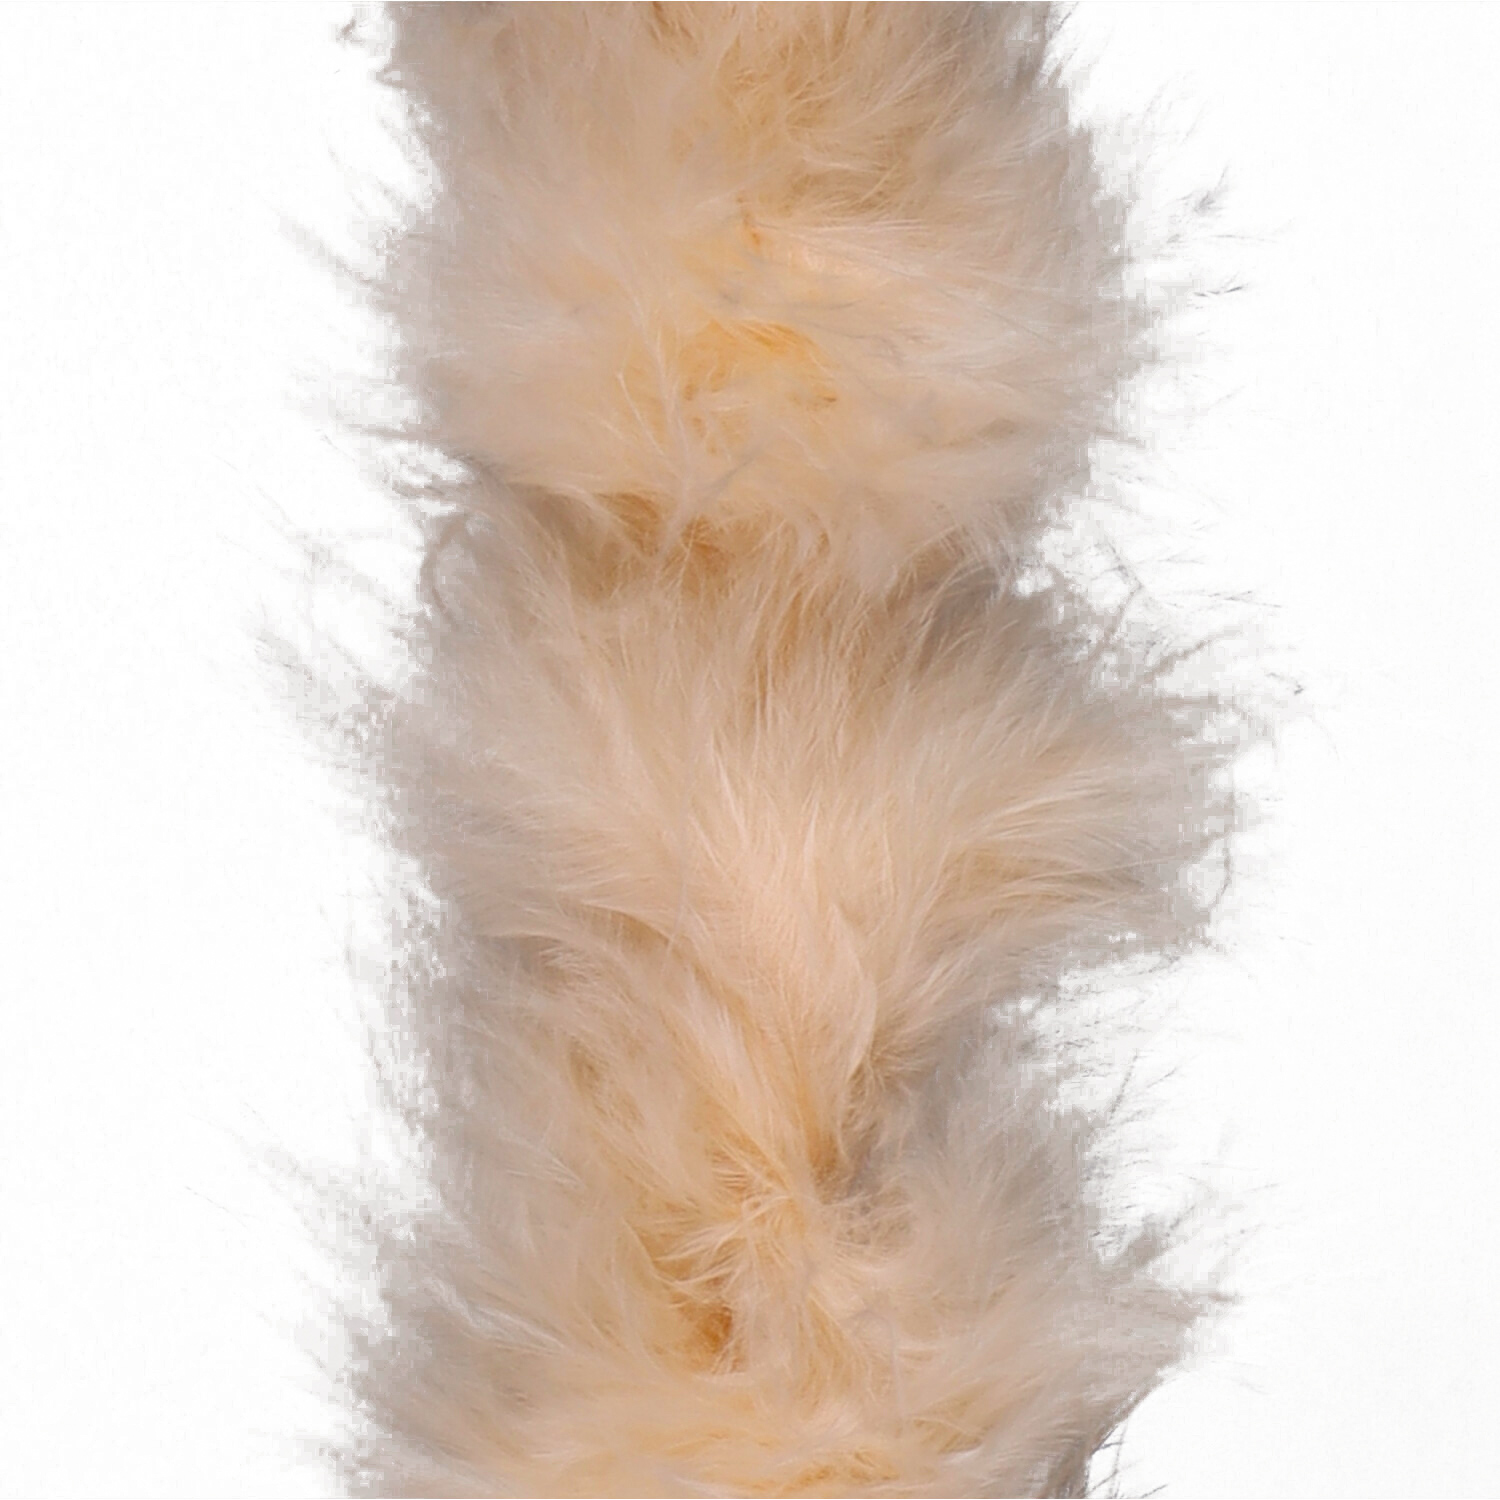 Boa di Marabou - Lungo 5 Metri - Altissima Qualità - Marabou Feather - Piume  di Marabout (Carne) 